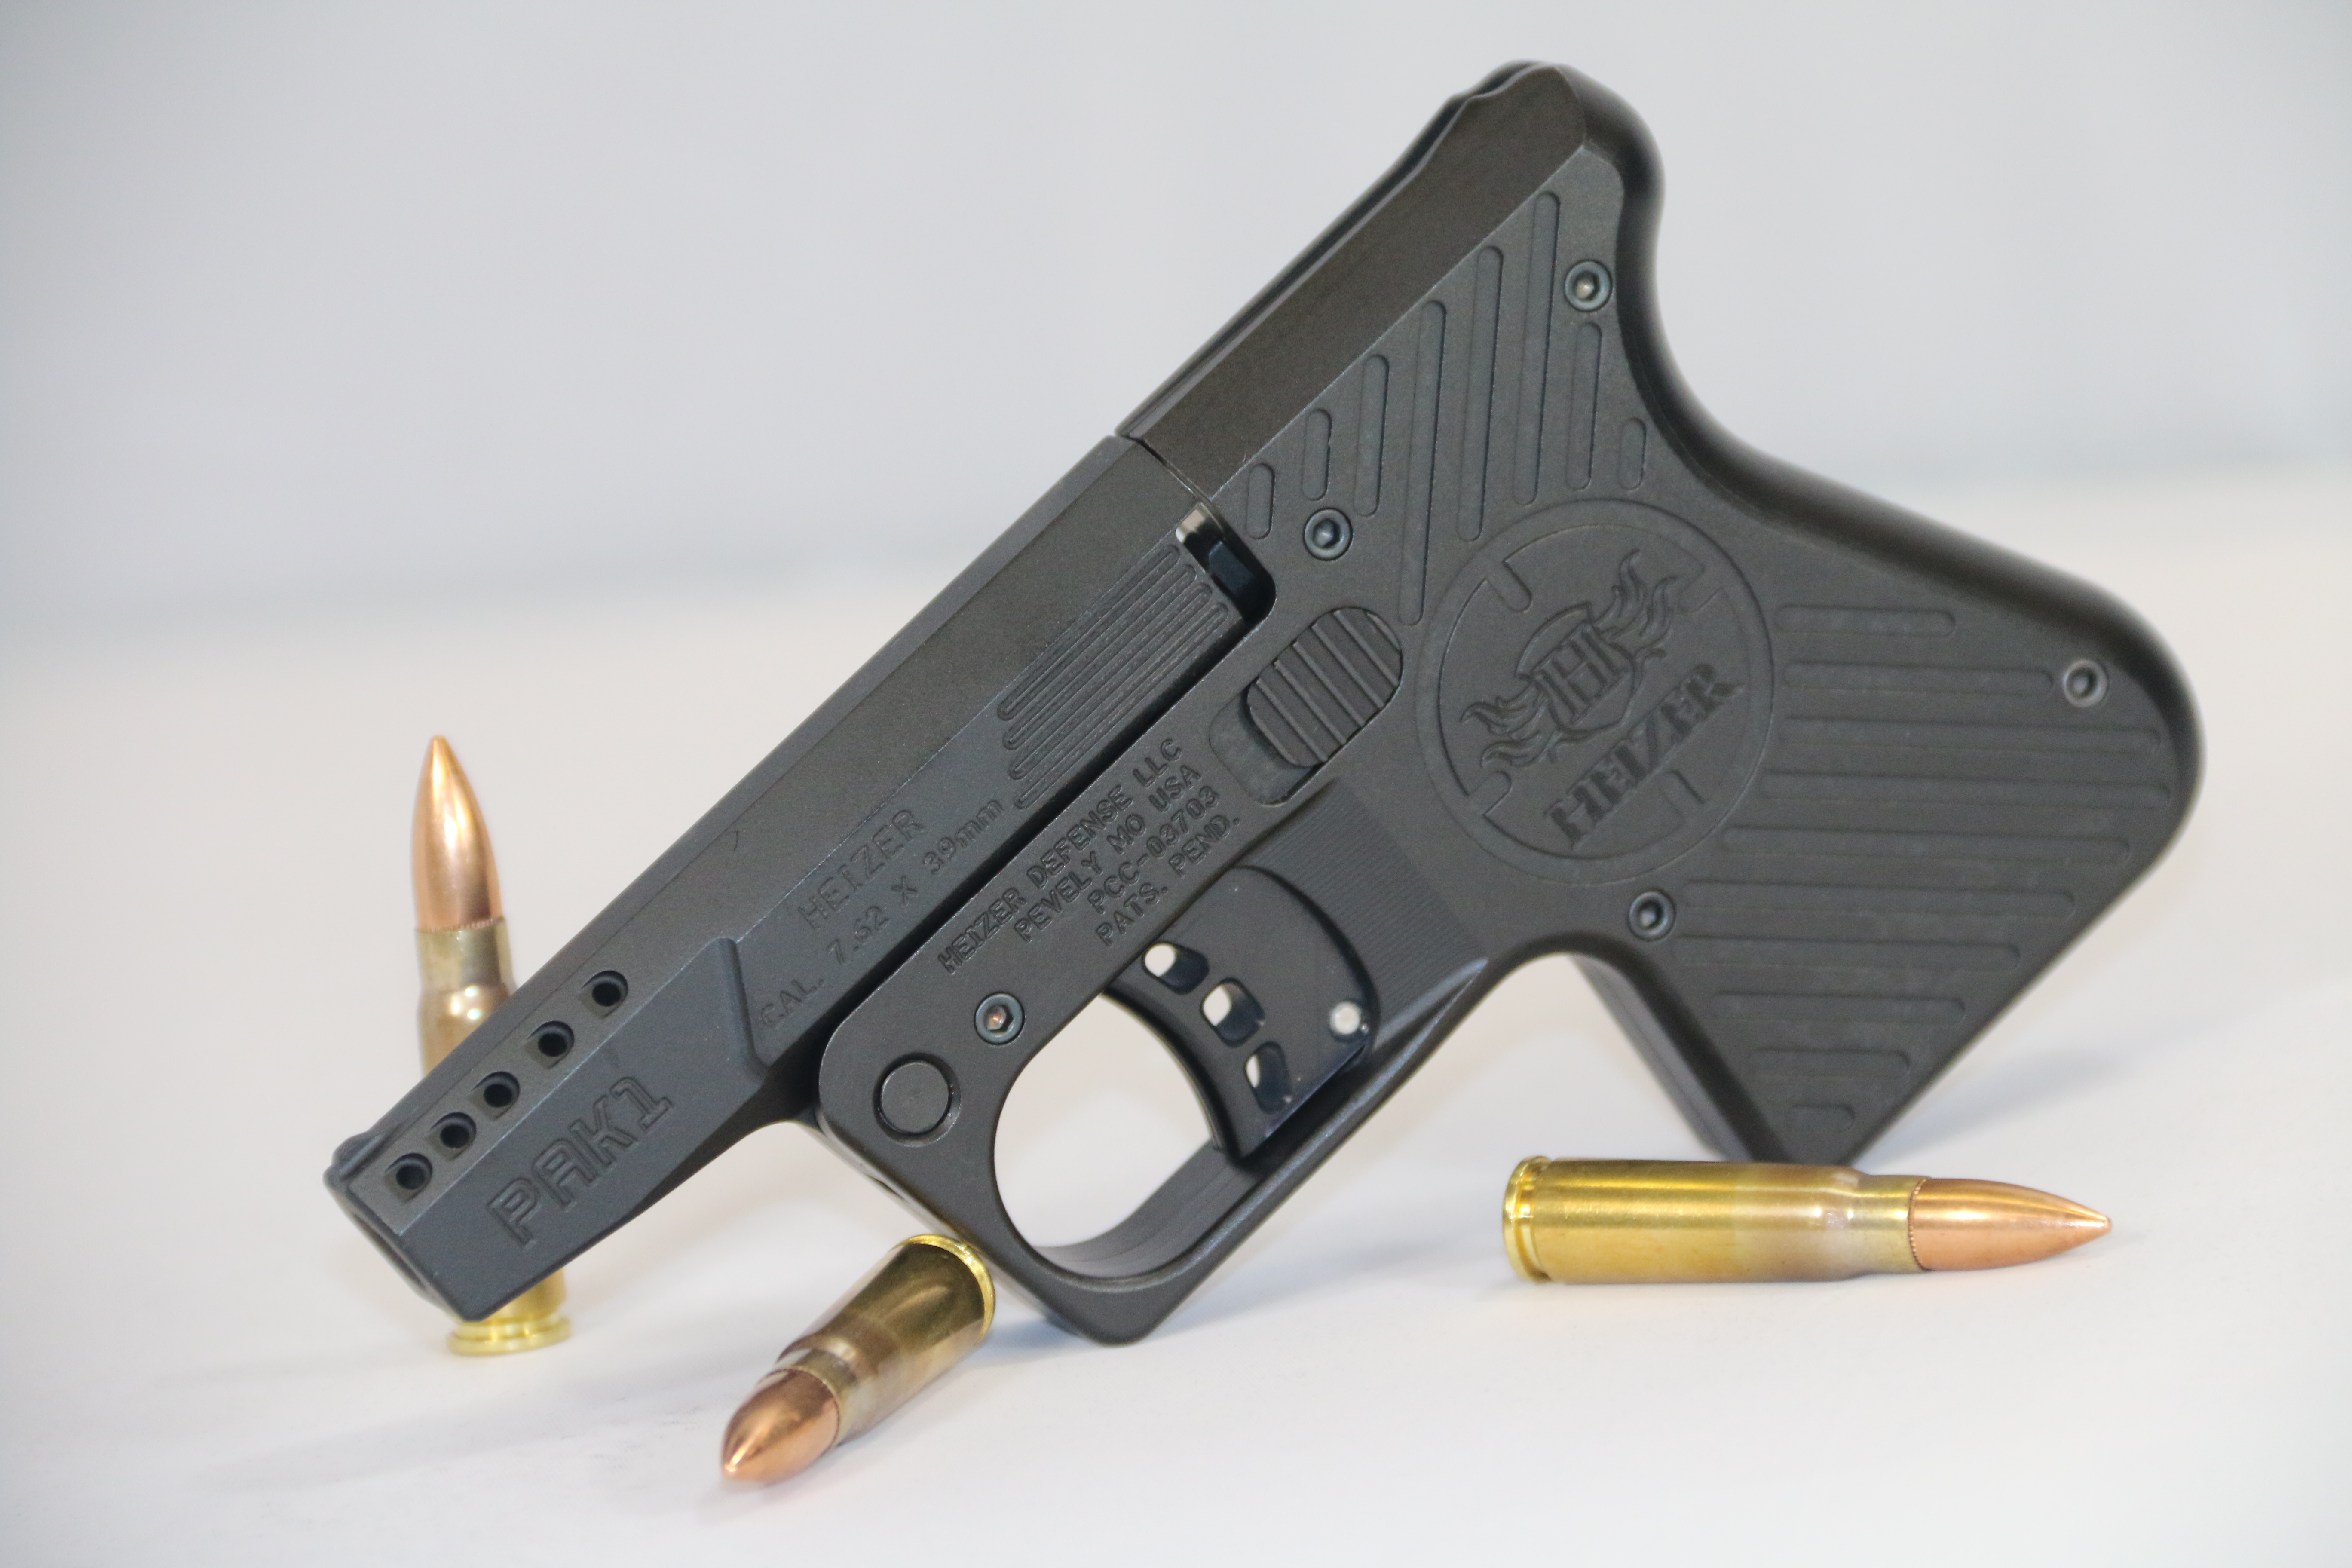 Heizer Defense Double Tap - double-barreled pistol for self-defense